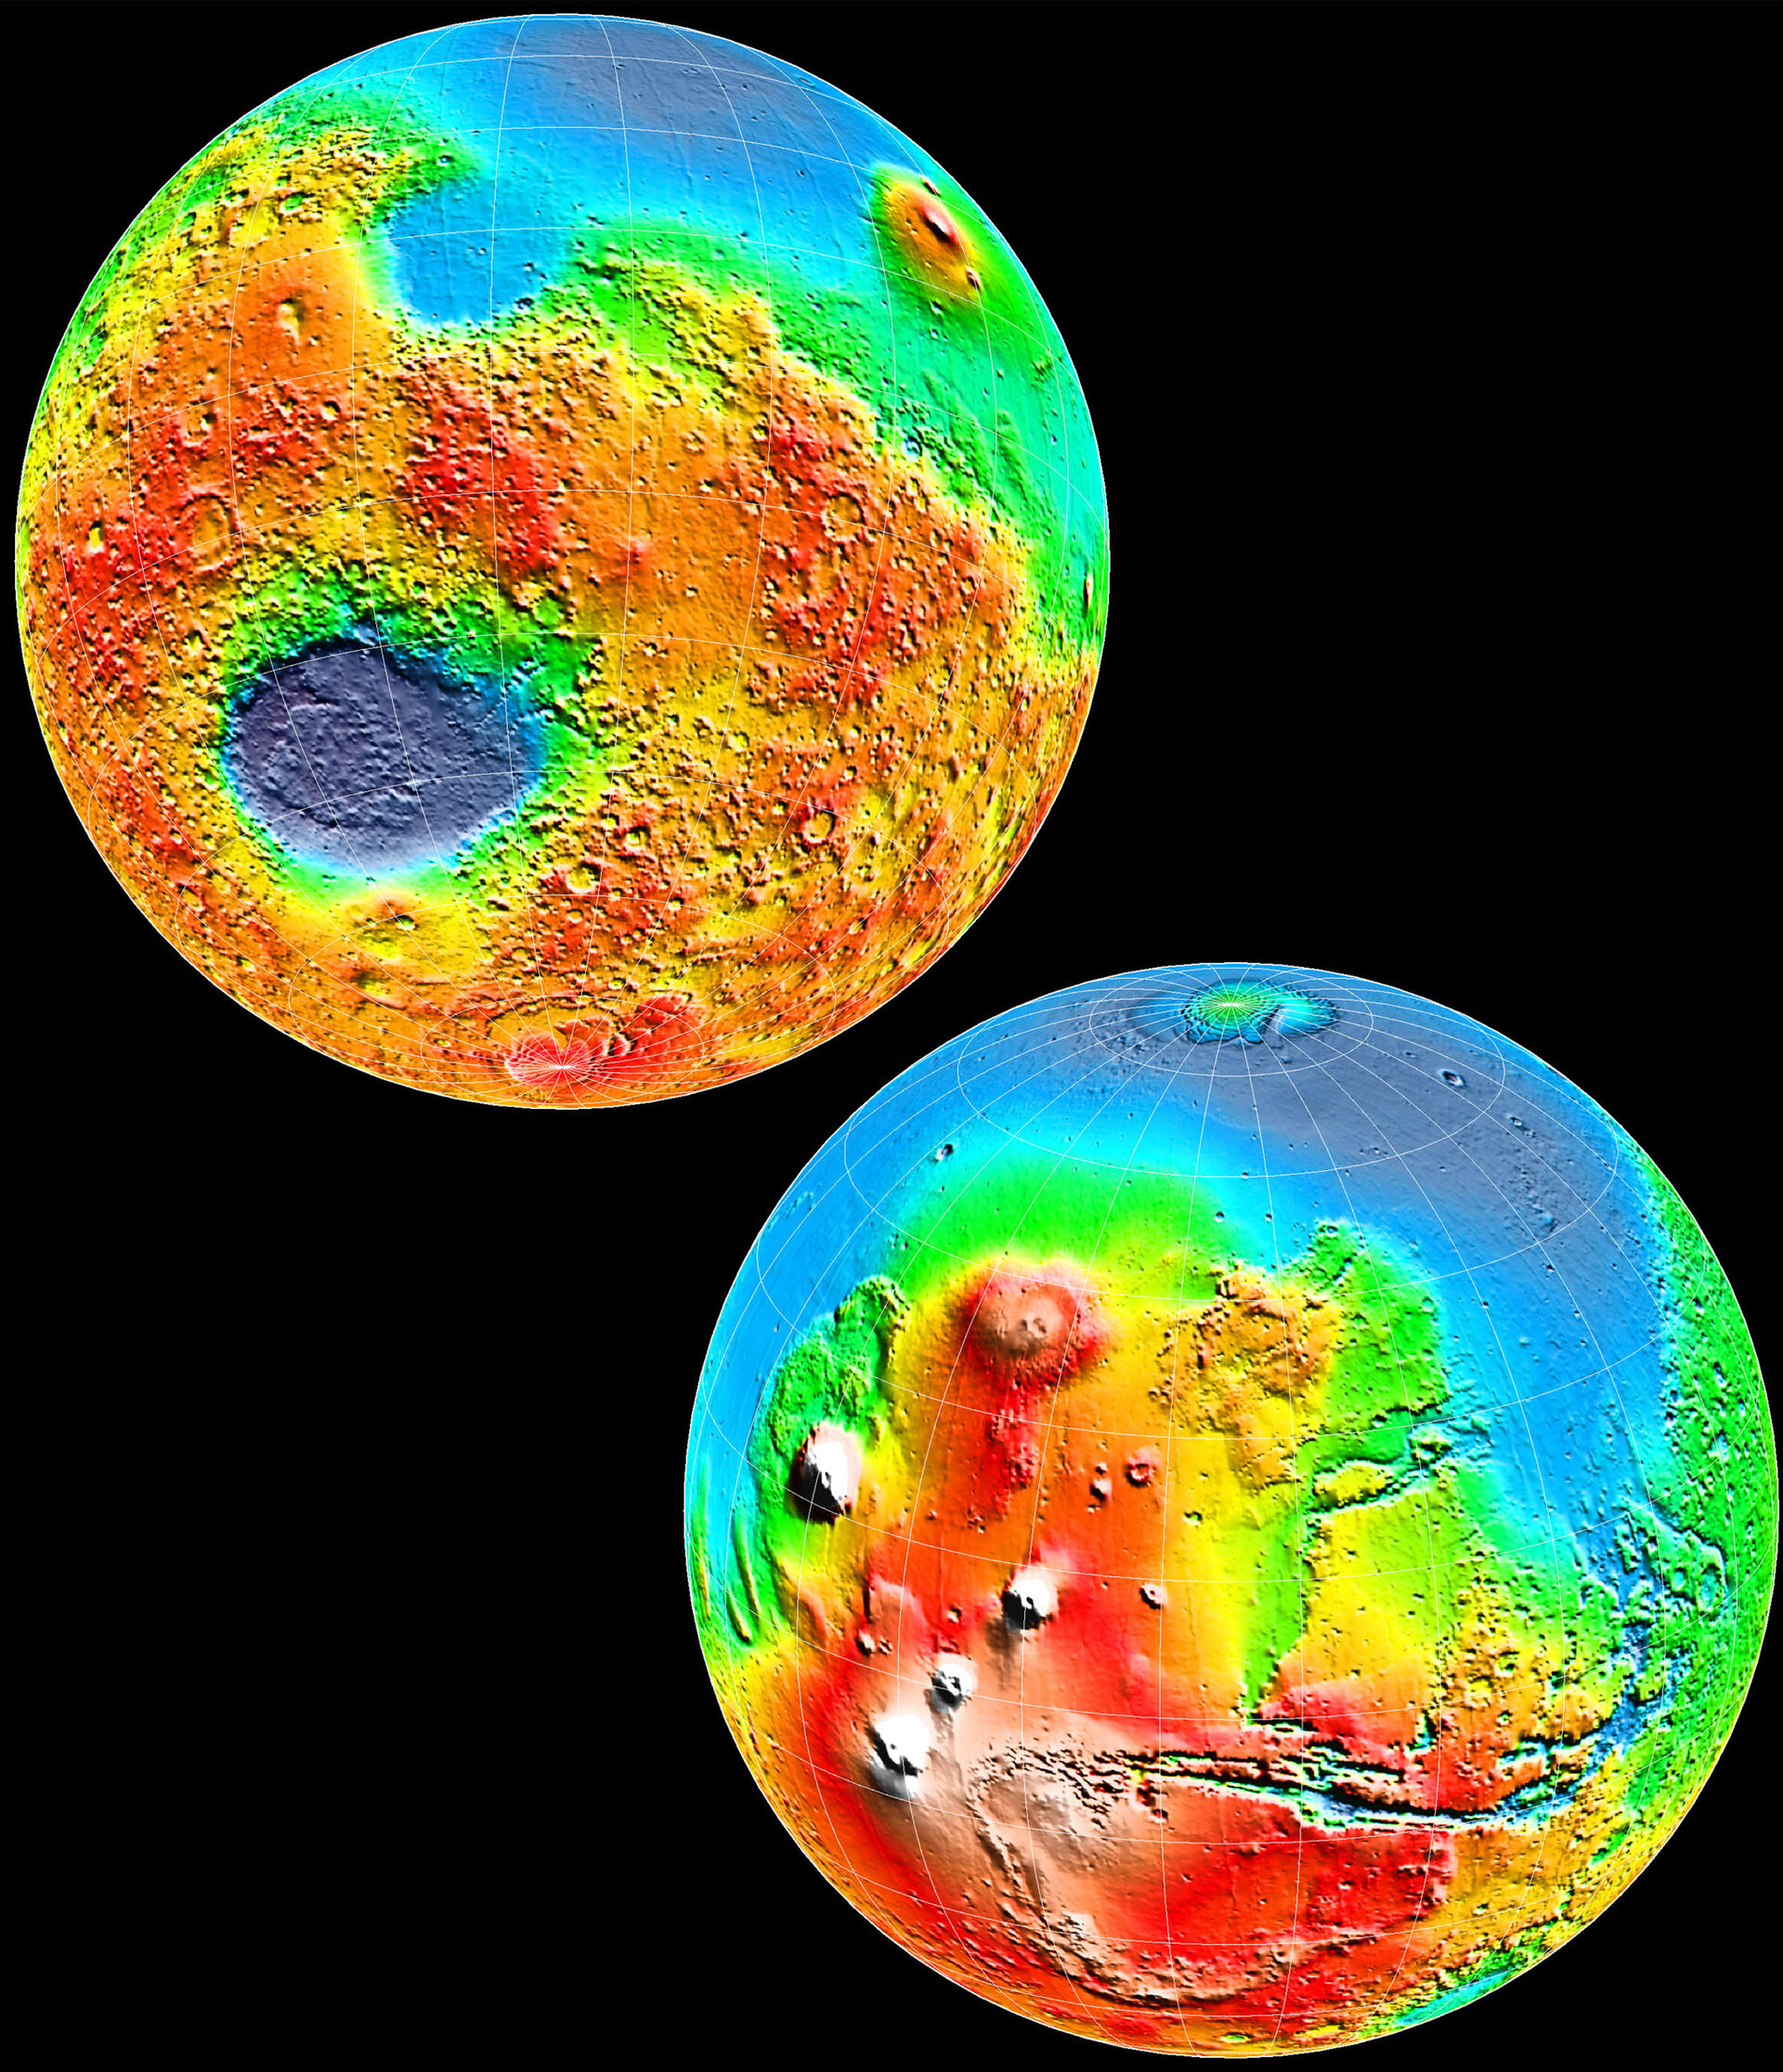 ESA - Topography of Mars